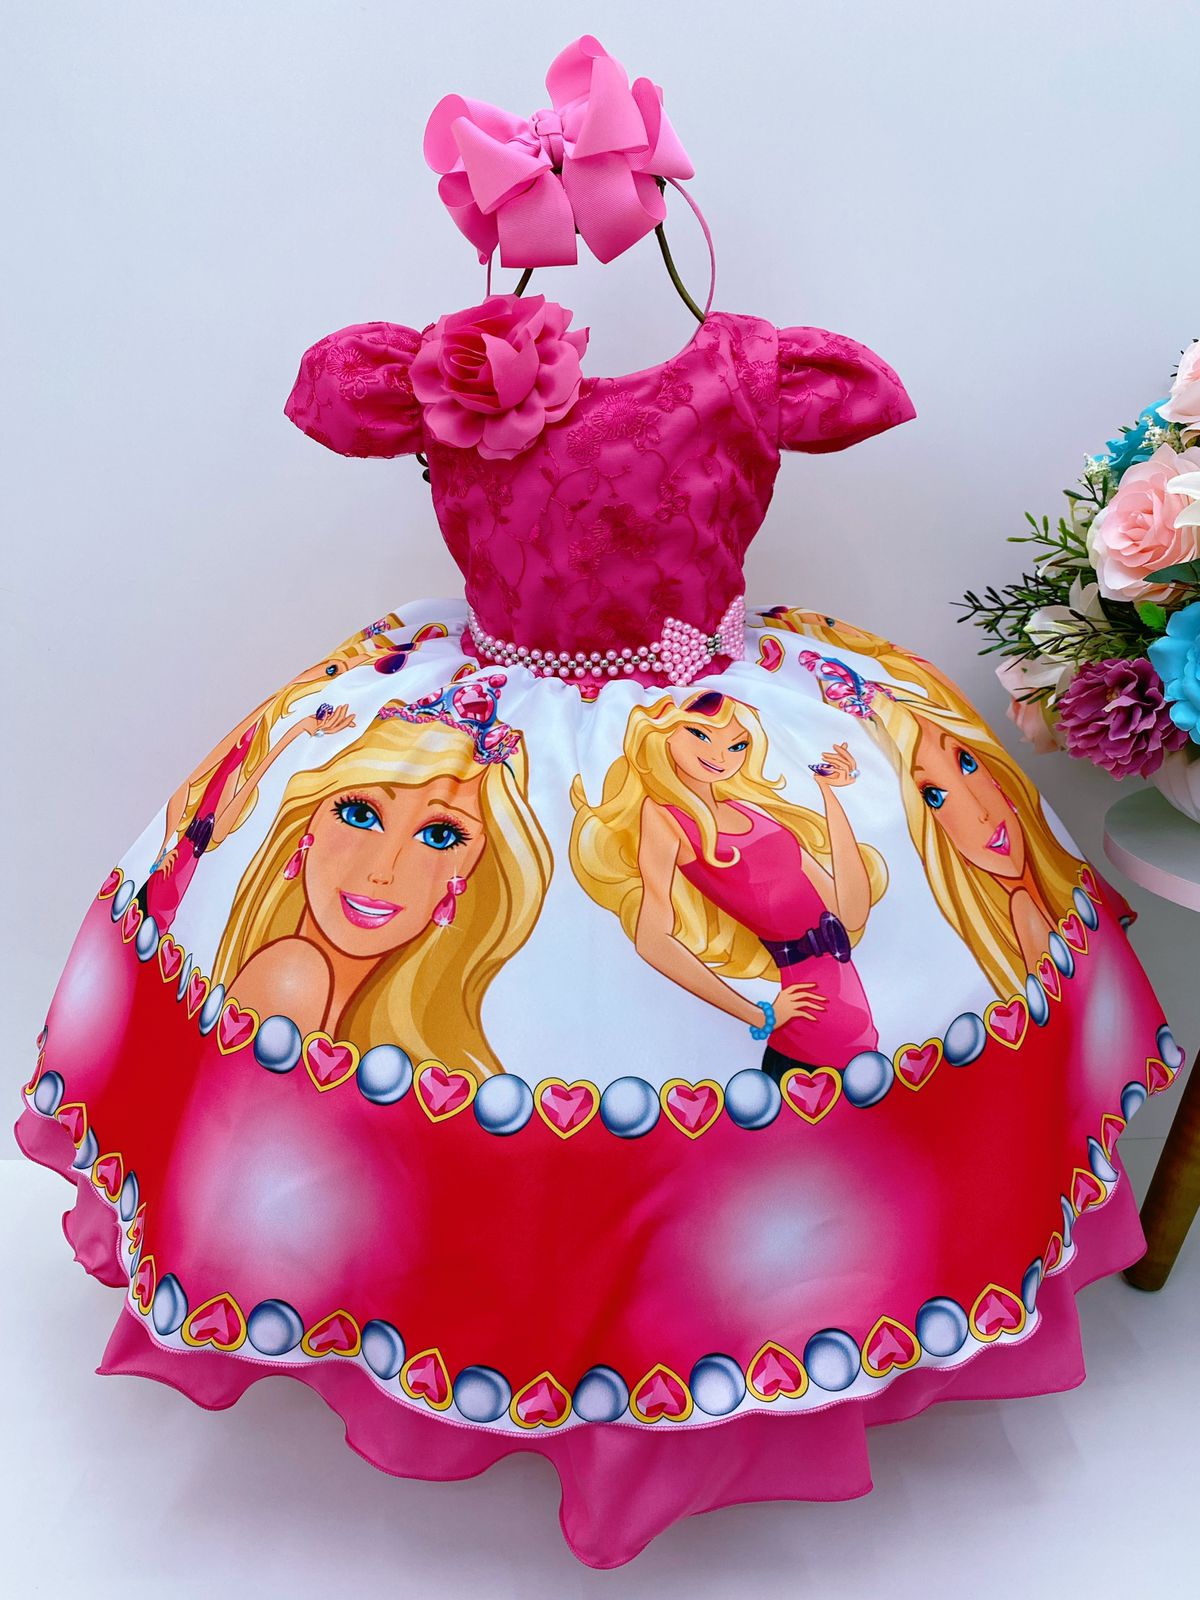 Vestido festa infantil Barbie meninas rosa luxo aniversário - LUXO